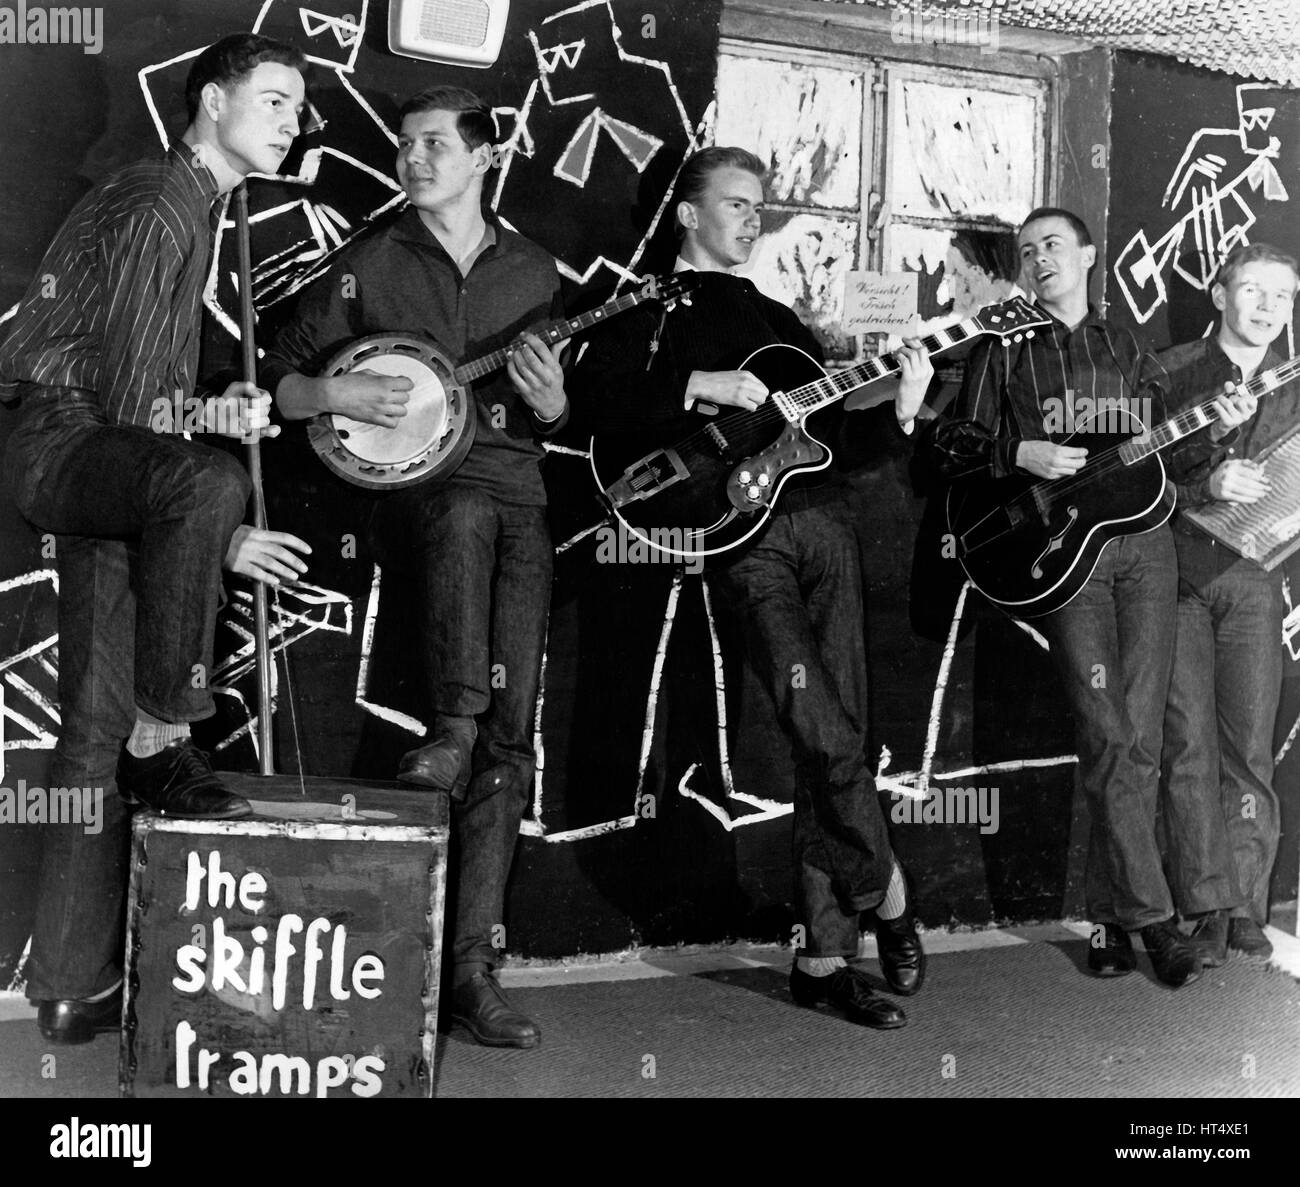 Die Skiffleband 'The Skiffle Tramps' in Hamburg, Deutschland 1960er Jahre. The skiffle band 'The Skiffle Tramps' performing at Hamburg, Germany 1960s. Stock Photo